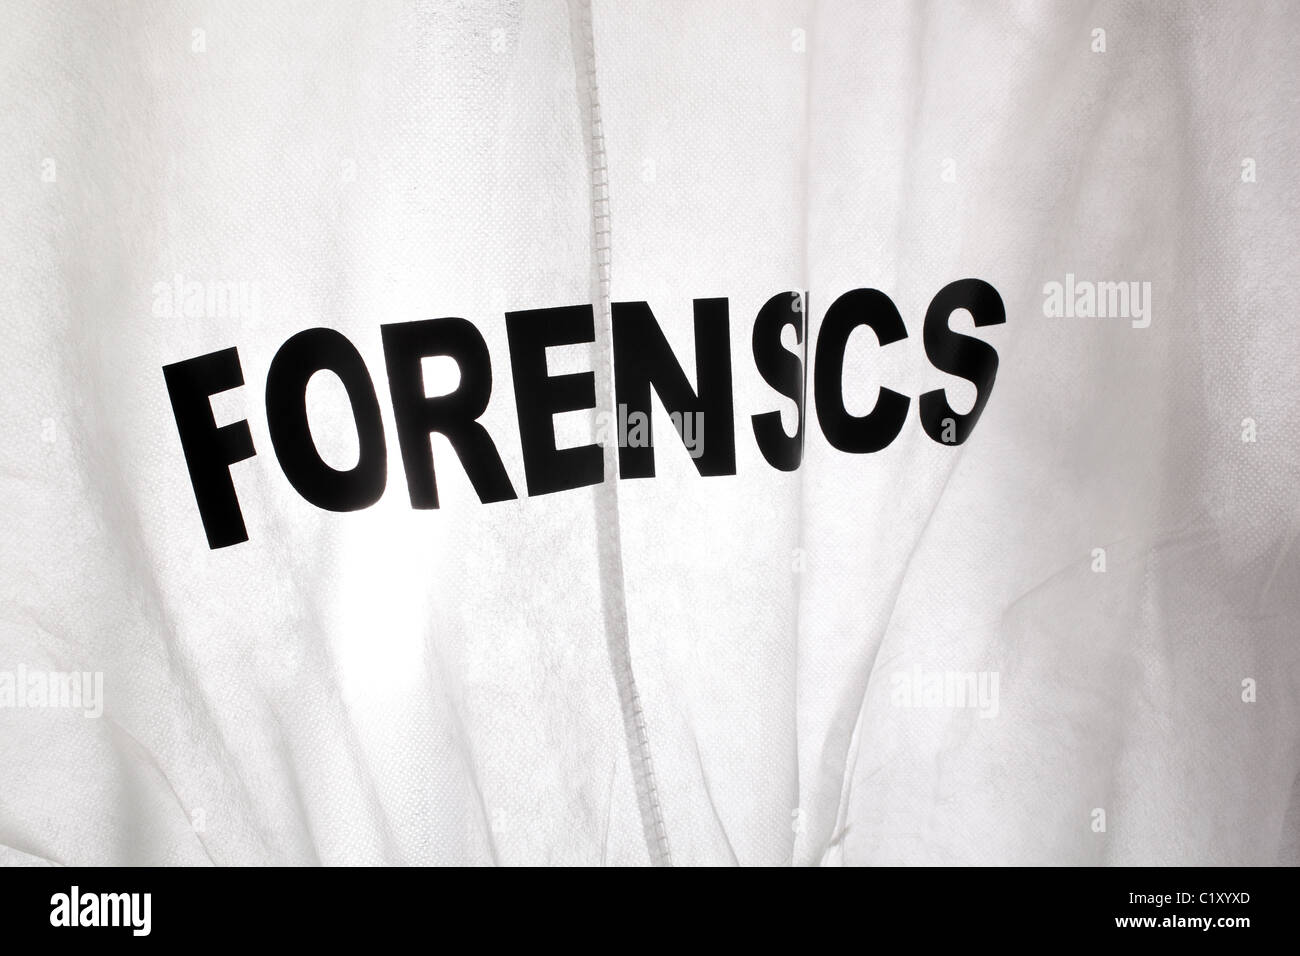 Forensics protective clothing Stock Photo